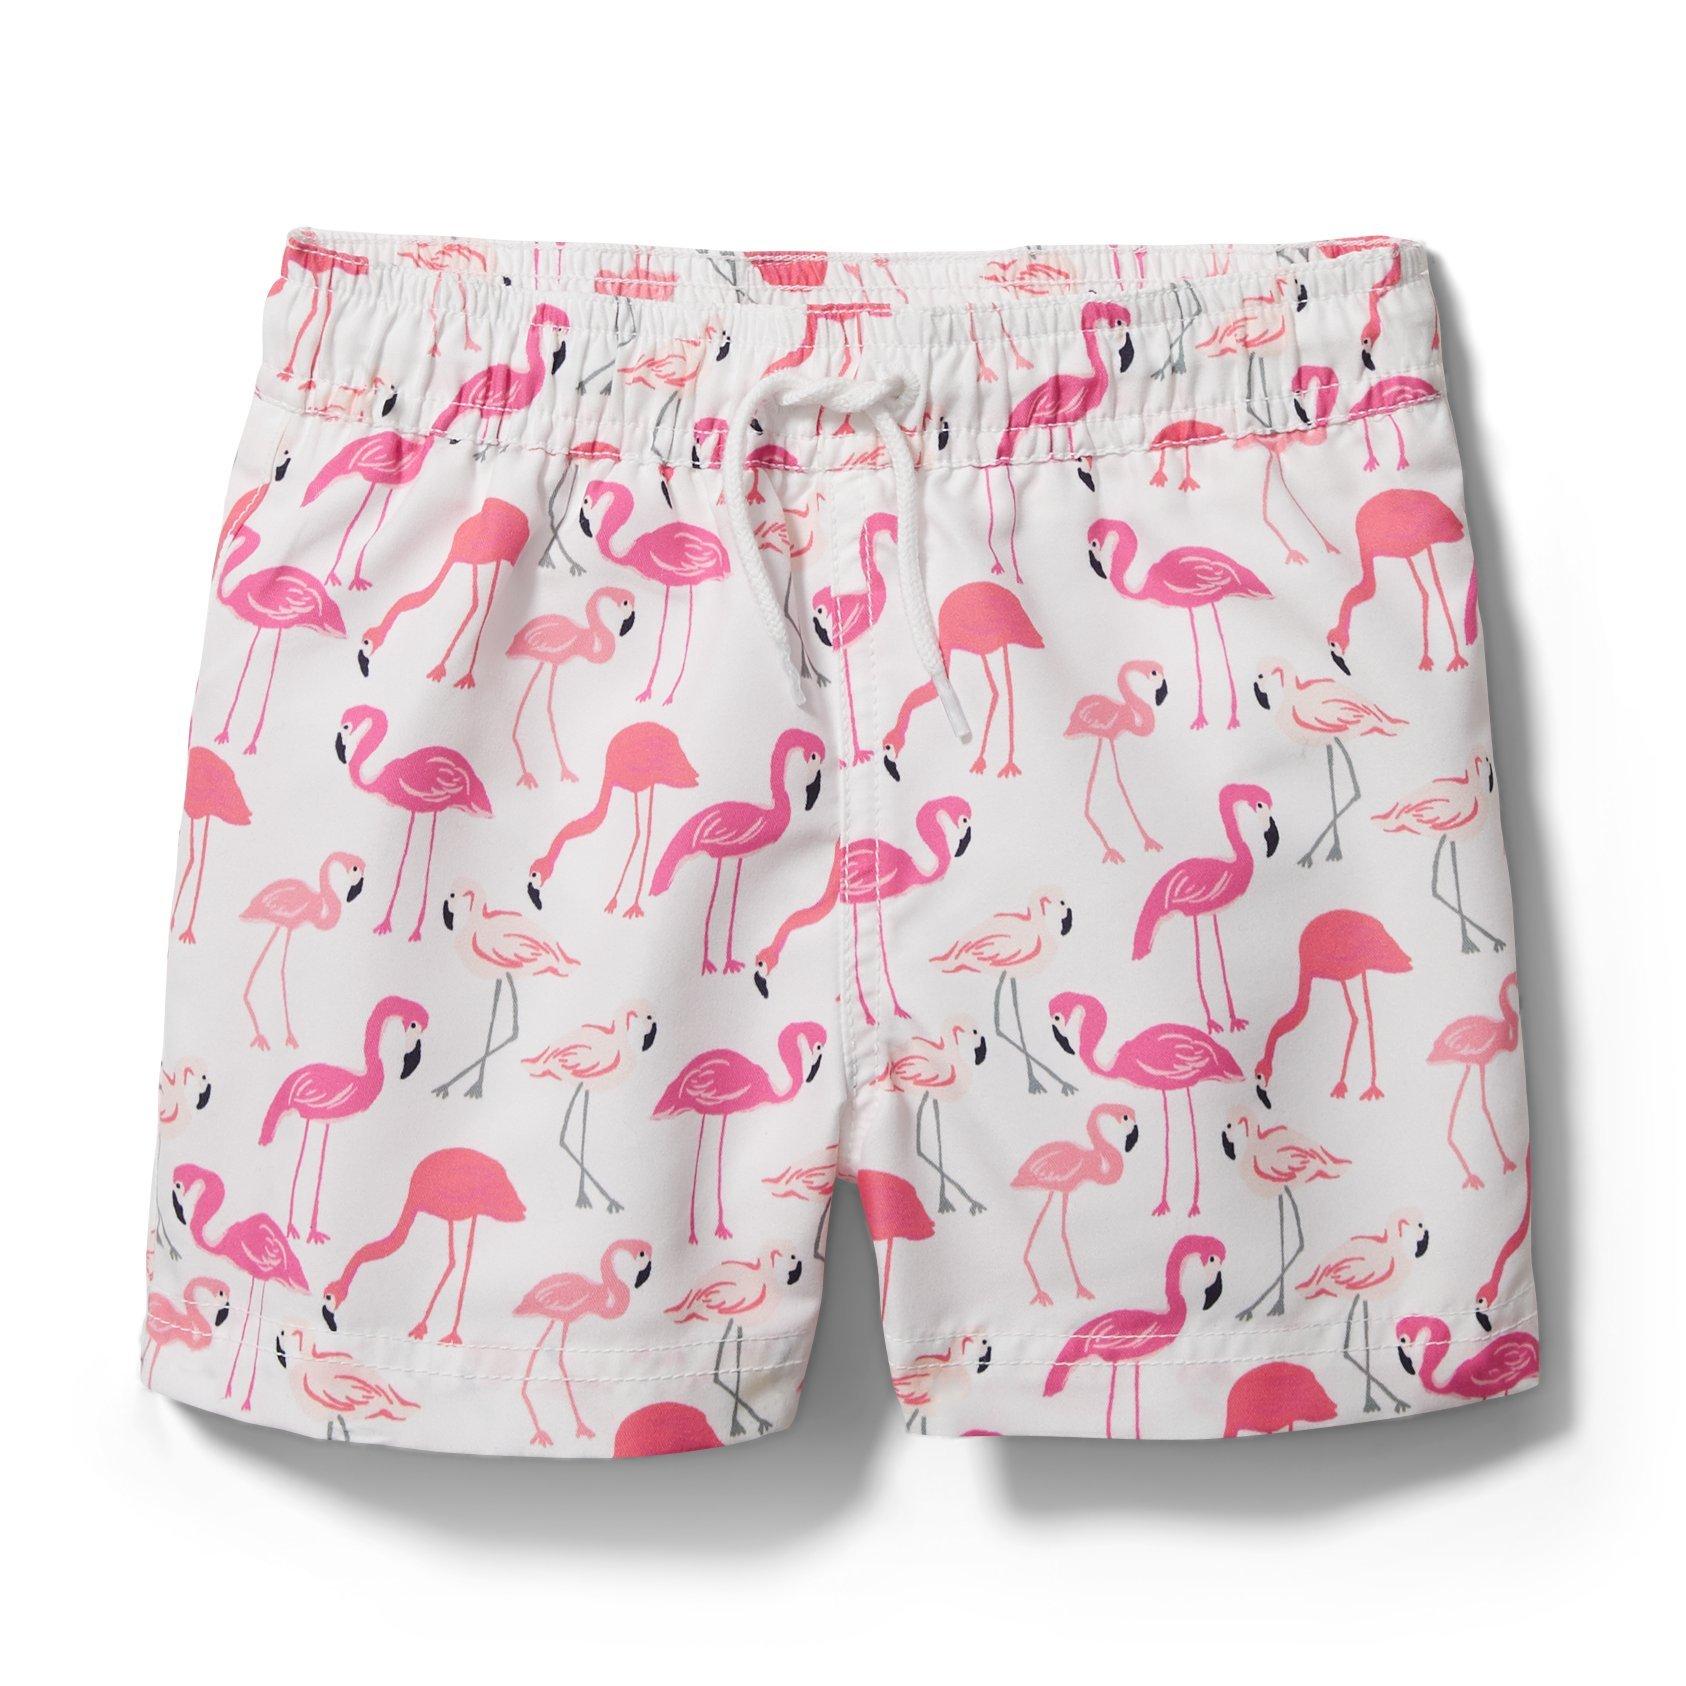 twin matching swimwear, flamingo swim trunks